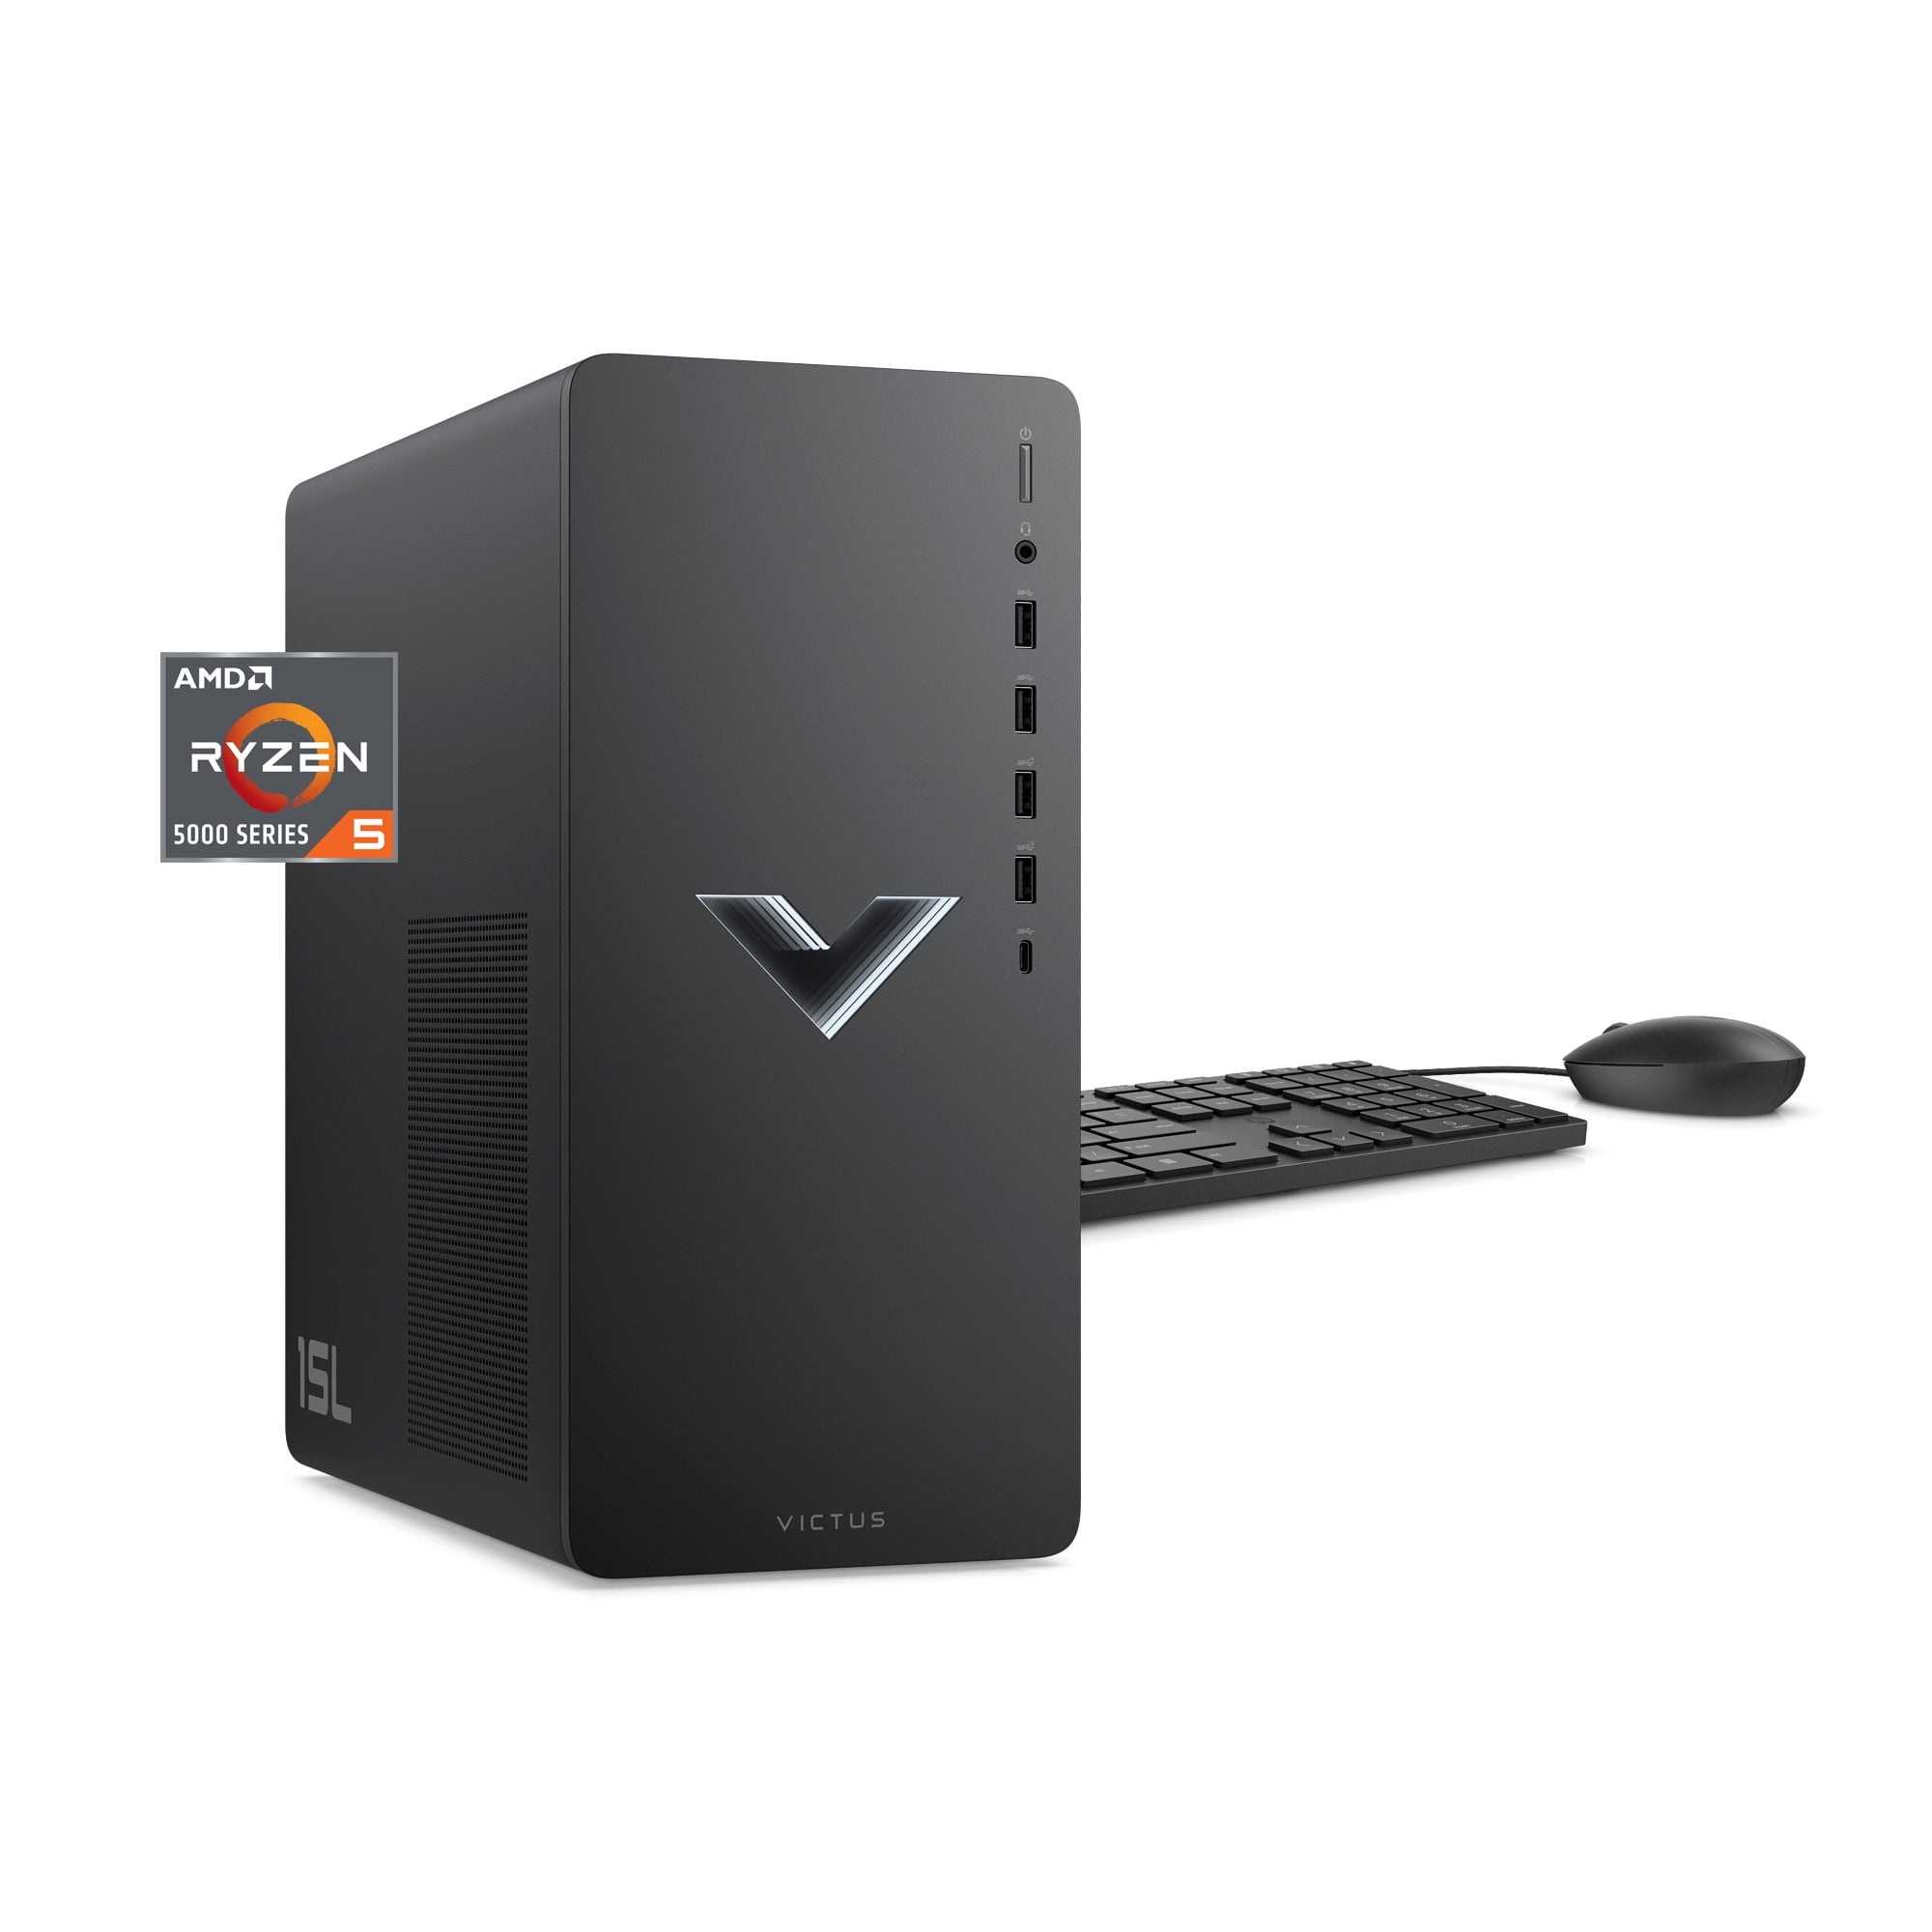 HP Victus 15L (TG02-0093w) Gaming Desktop, AMD Ryzen 5, 8GB RAM, 512GB SSD